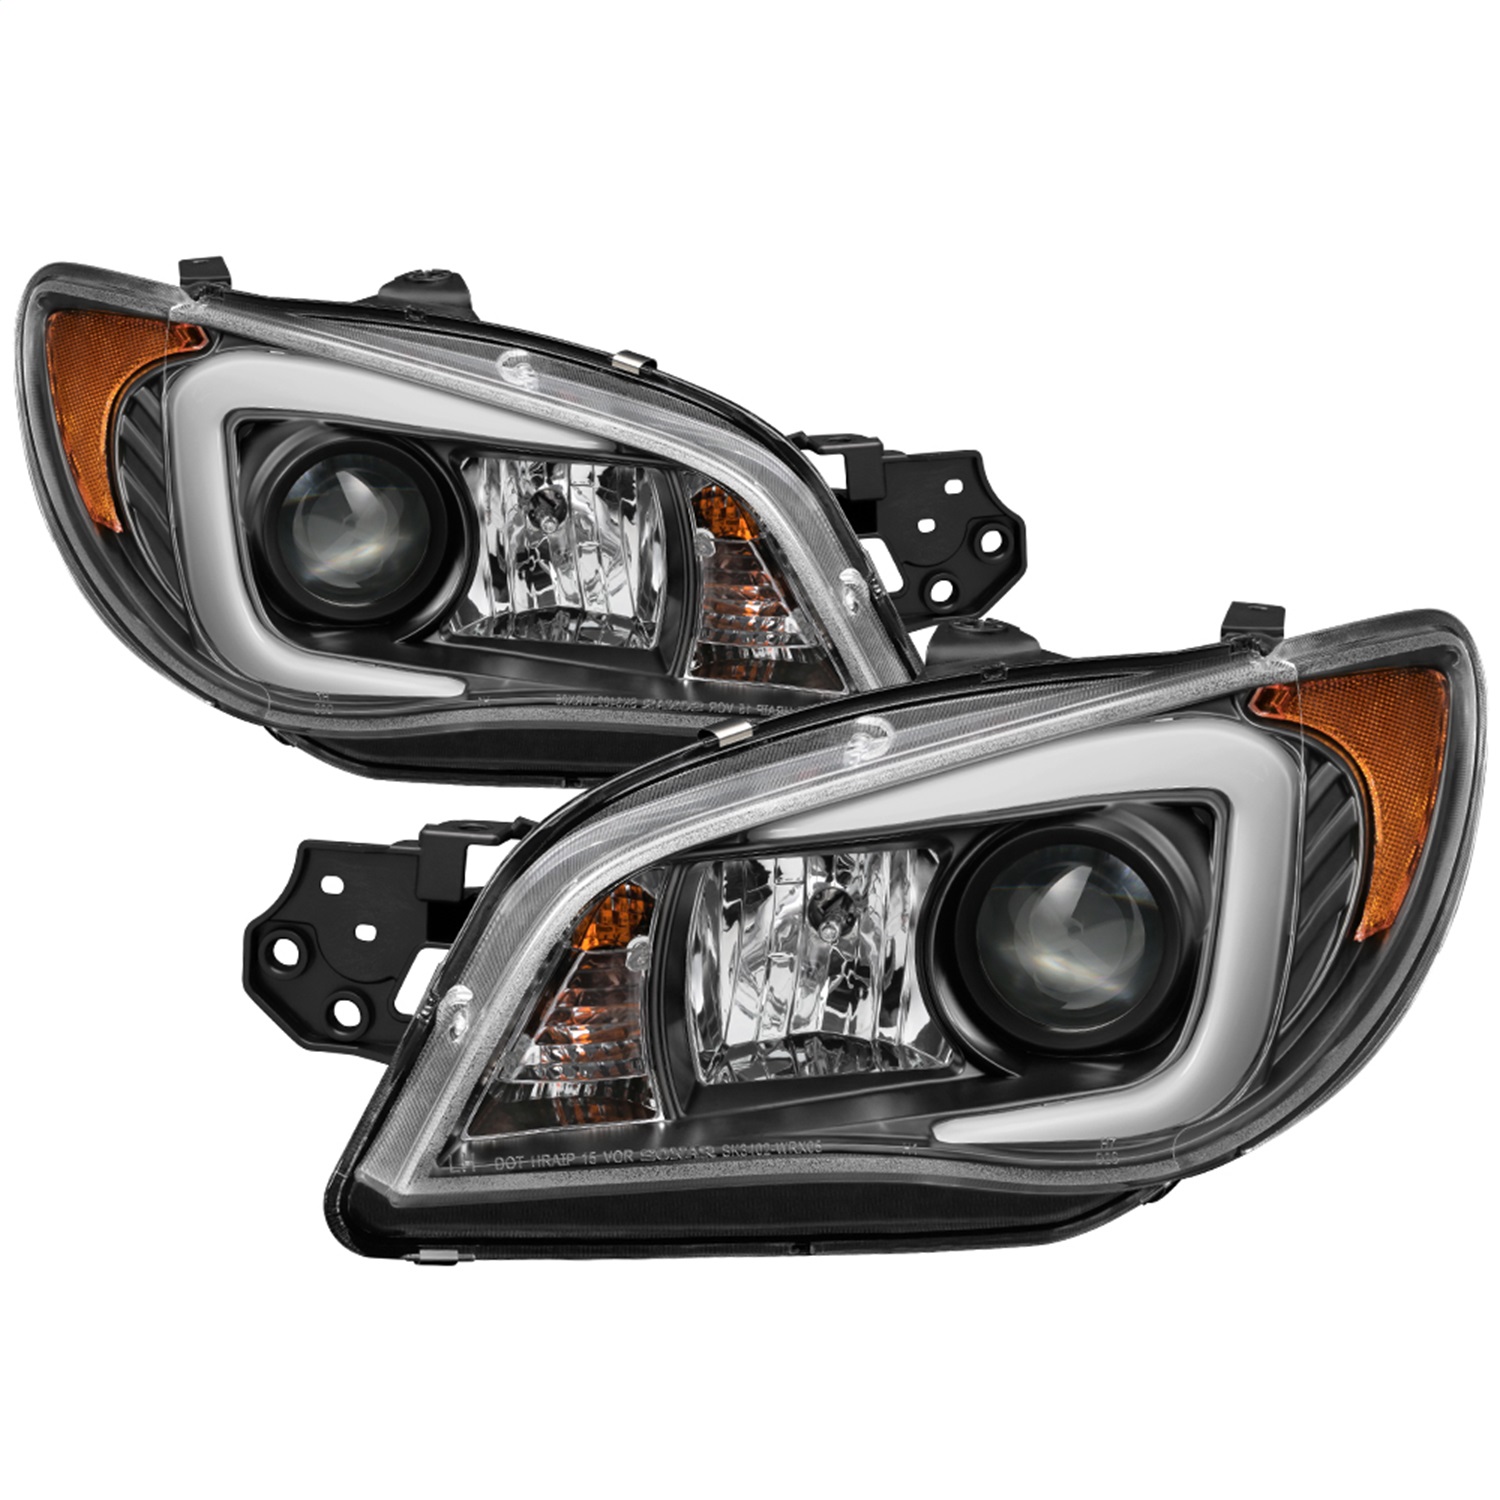 Spyder Auto 5083913 DRL LED Projector Headlights Fits 06-07 Impreza